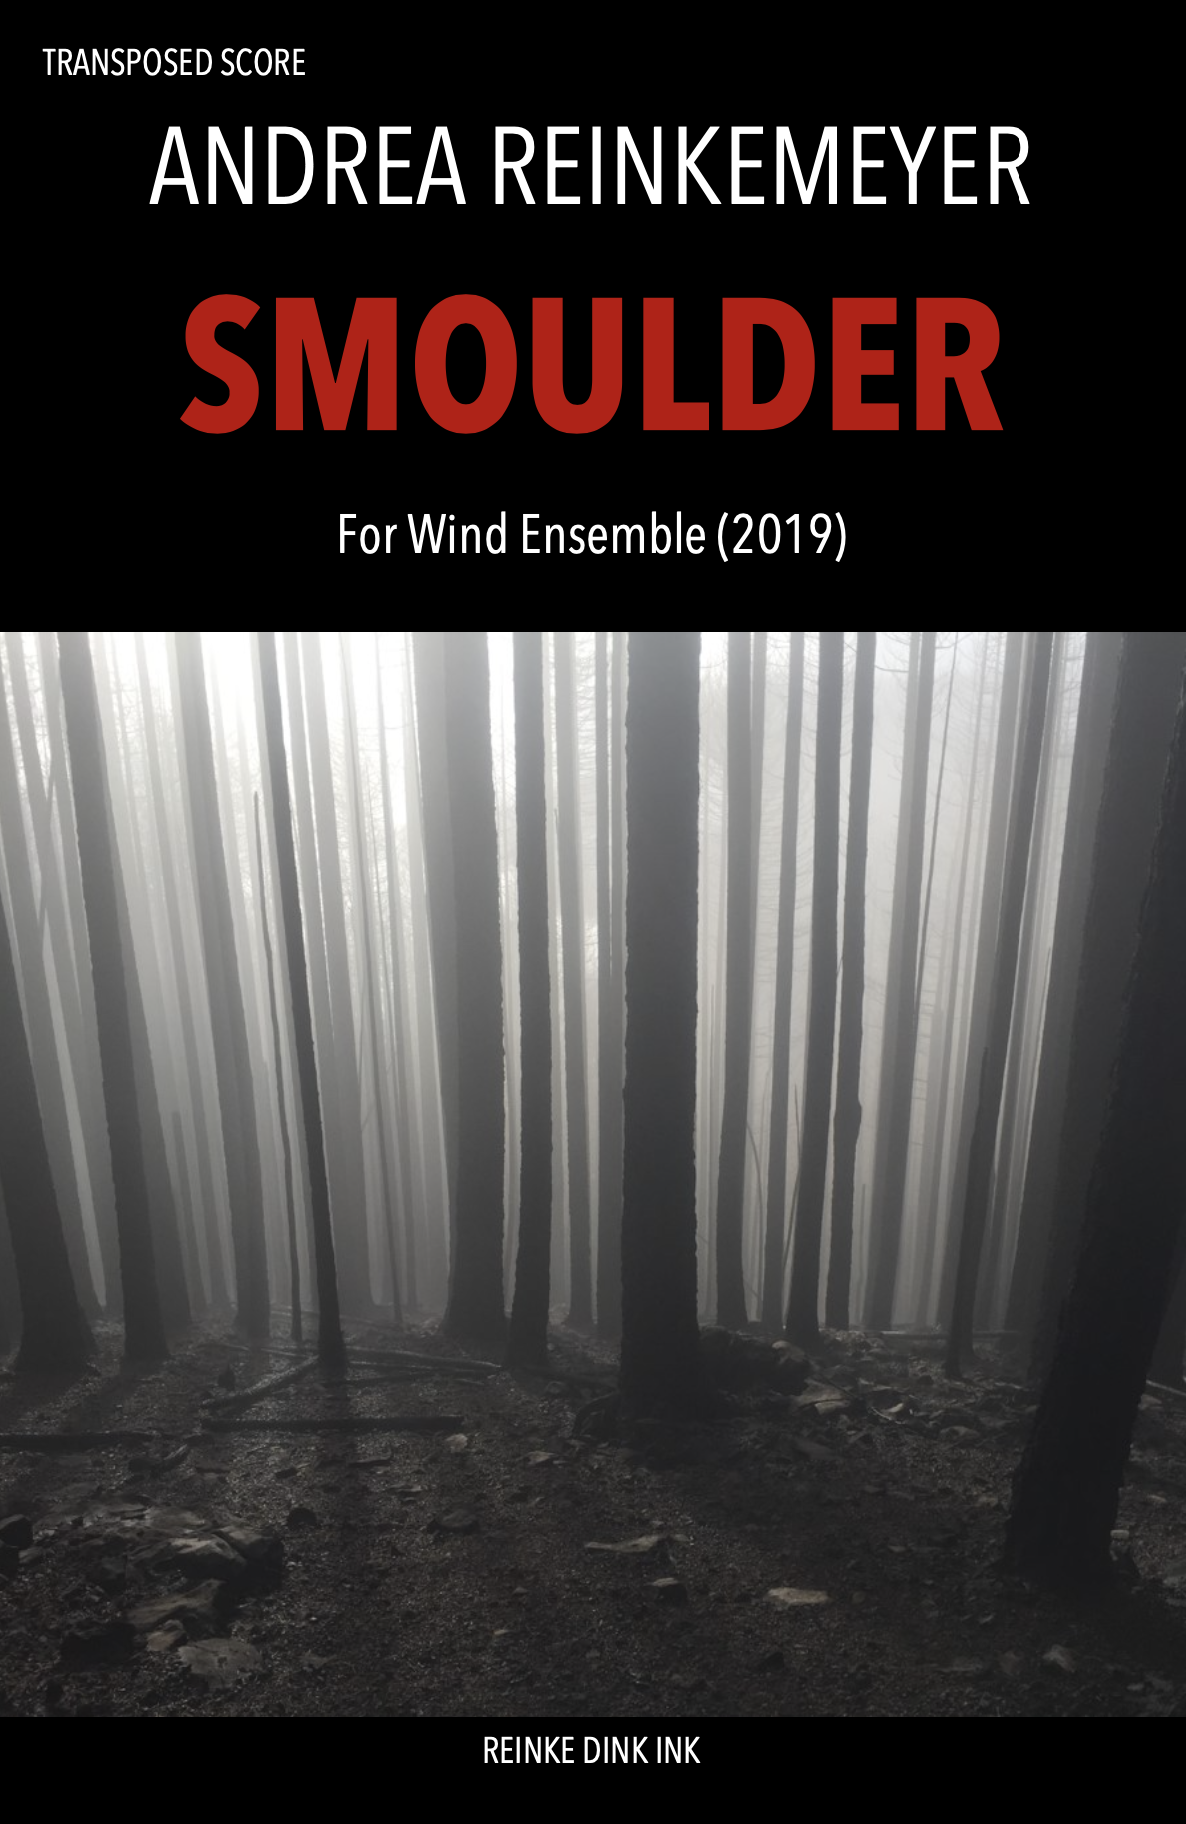 Smoulder by Andrea Reinkemeyer